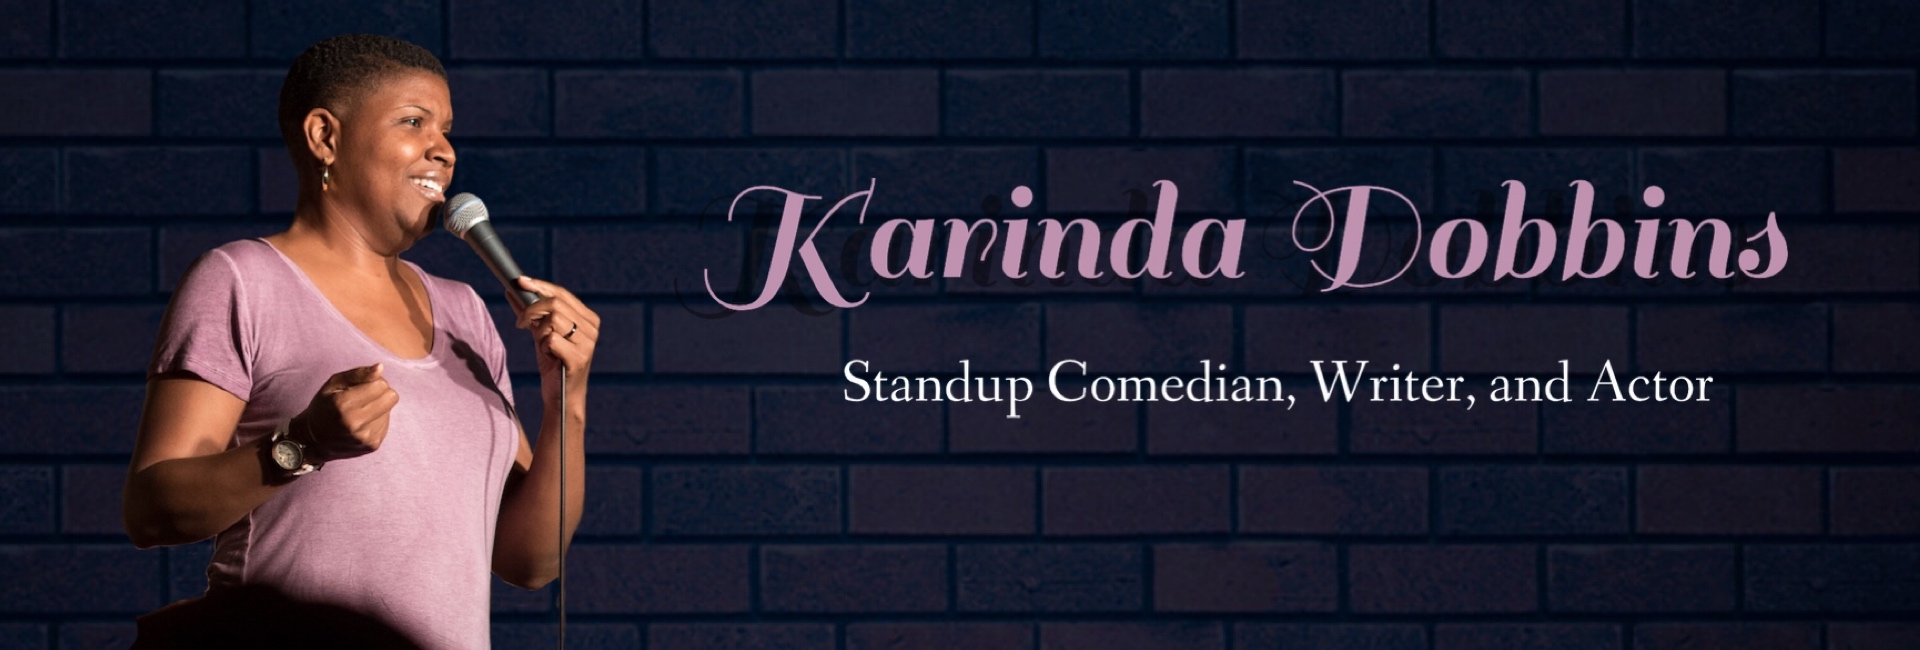 Karinda Dobbins - Official Website